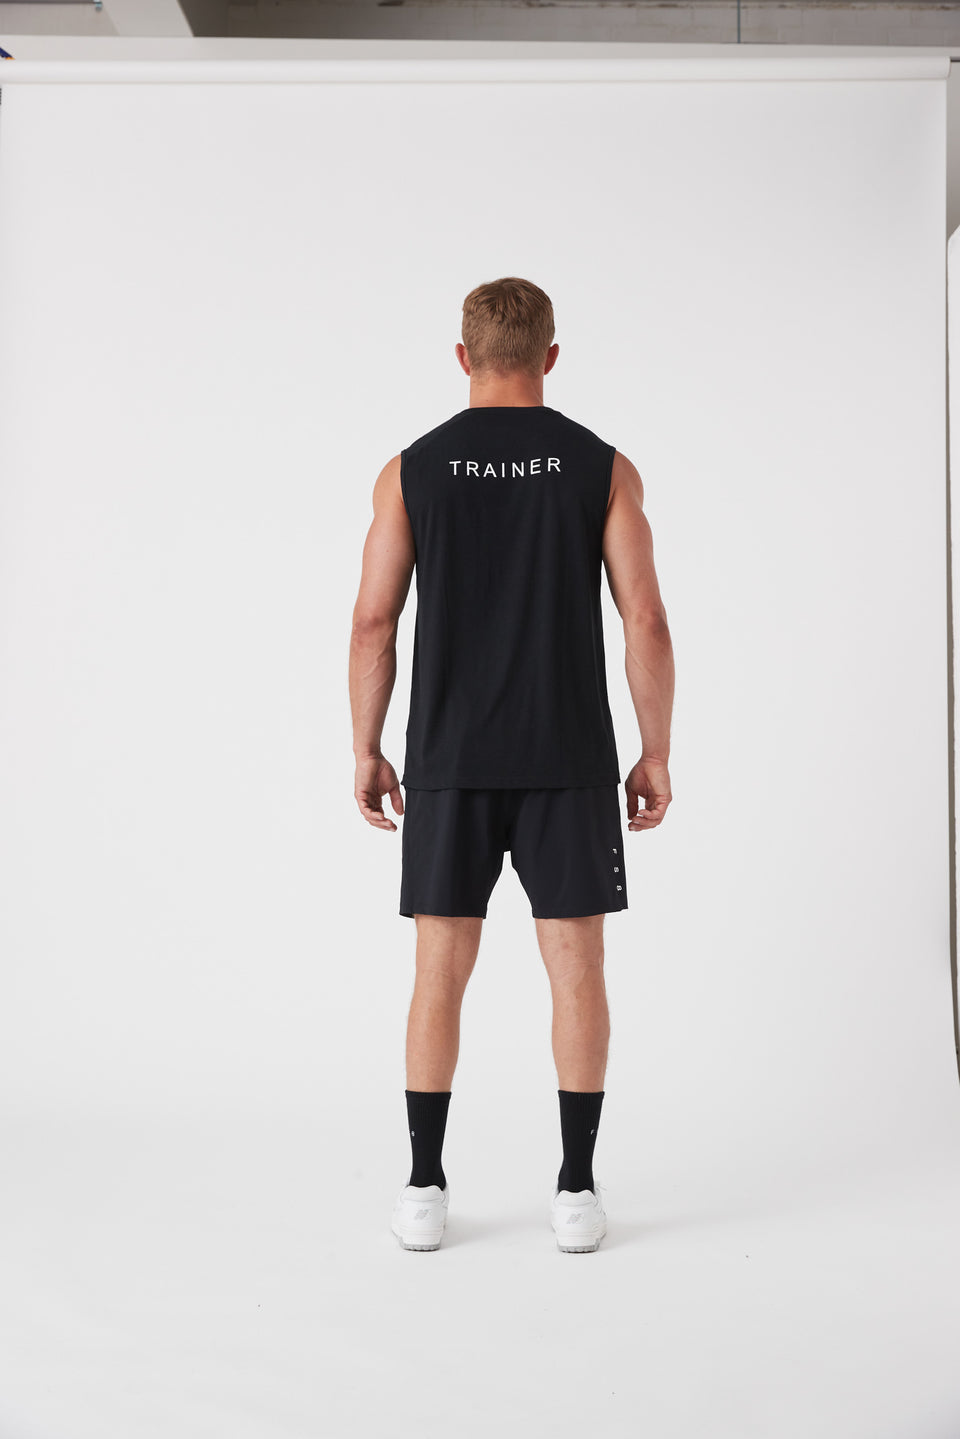 FS8 Trainer Men's Oxy Muscle – FS8 Wholesale AUS